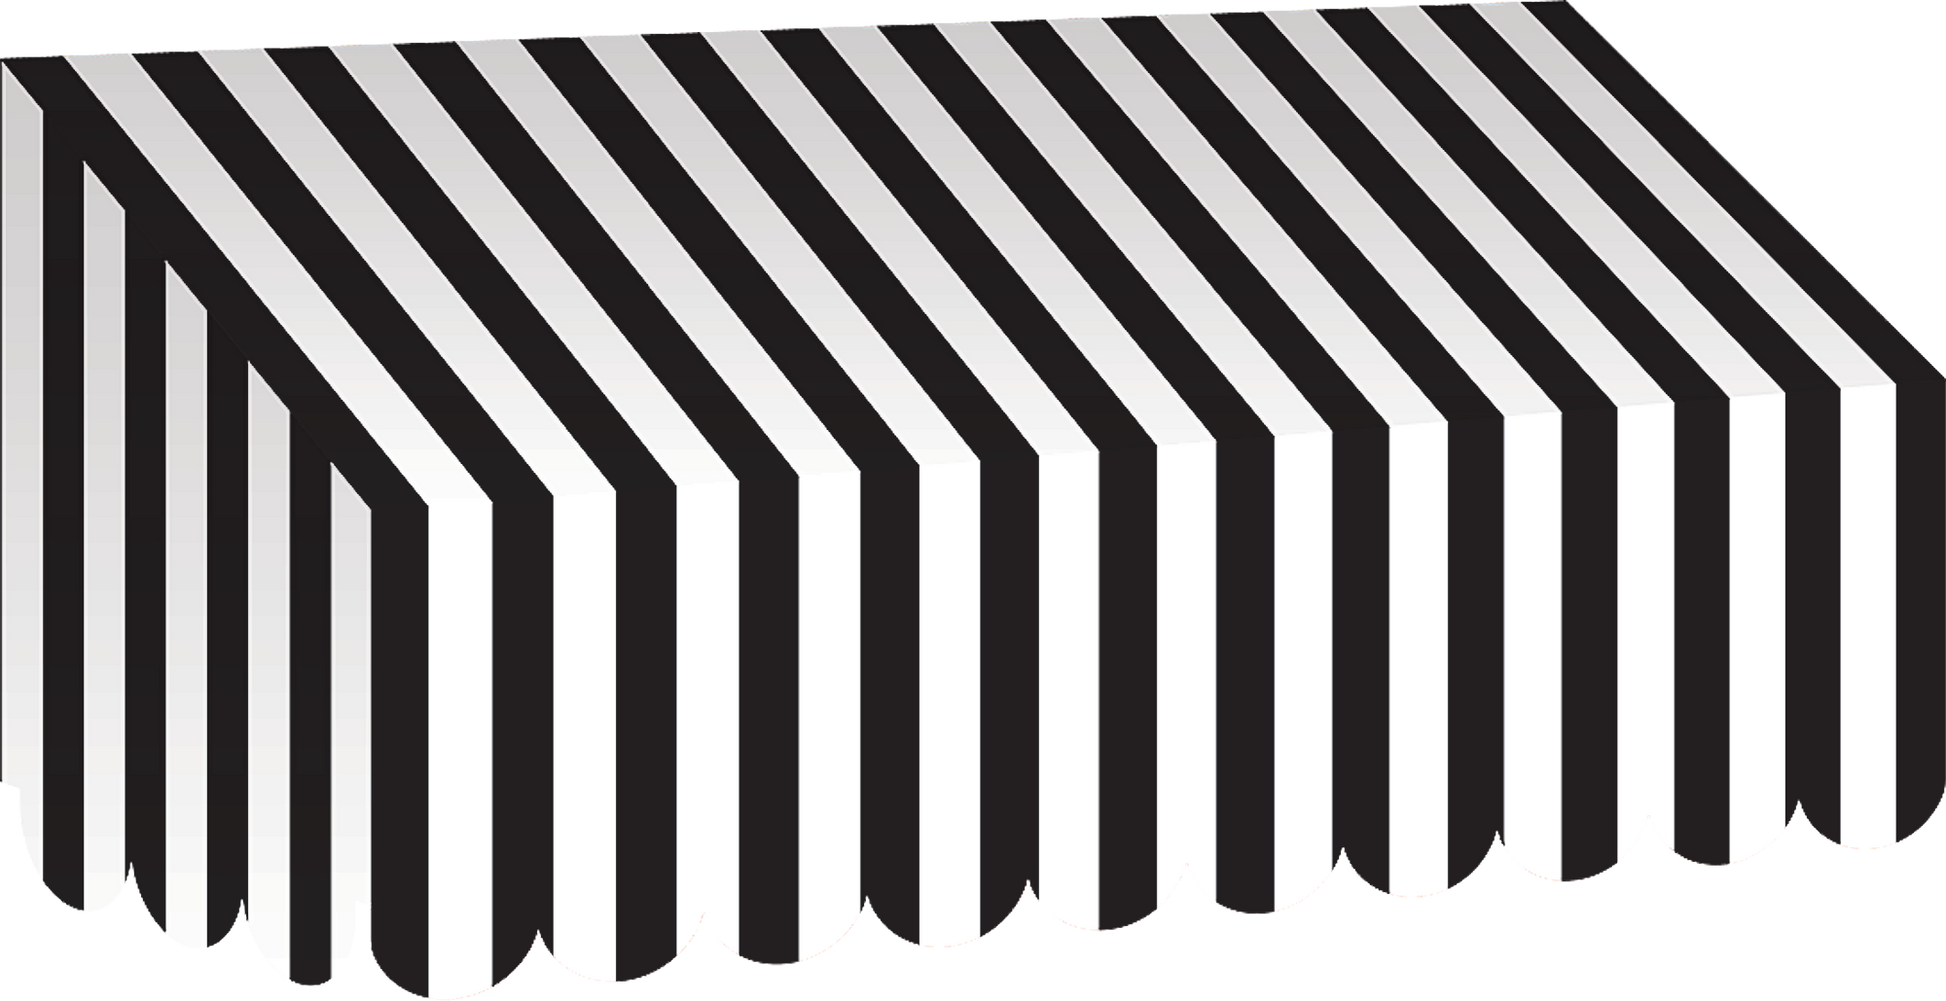 Black & White Stripes Awning